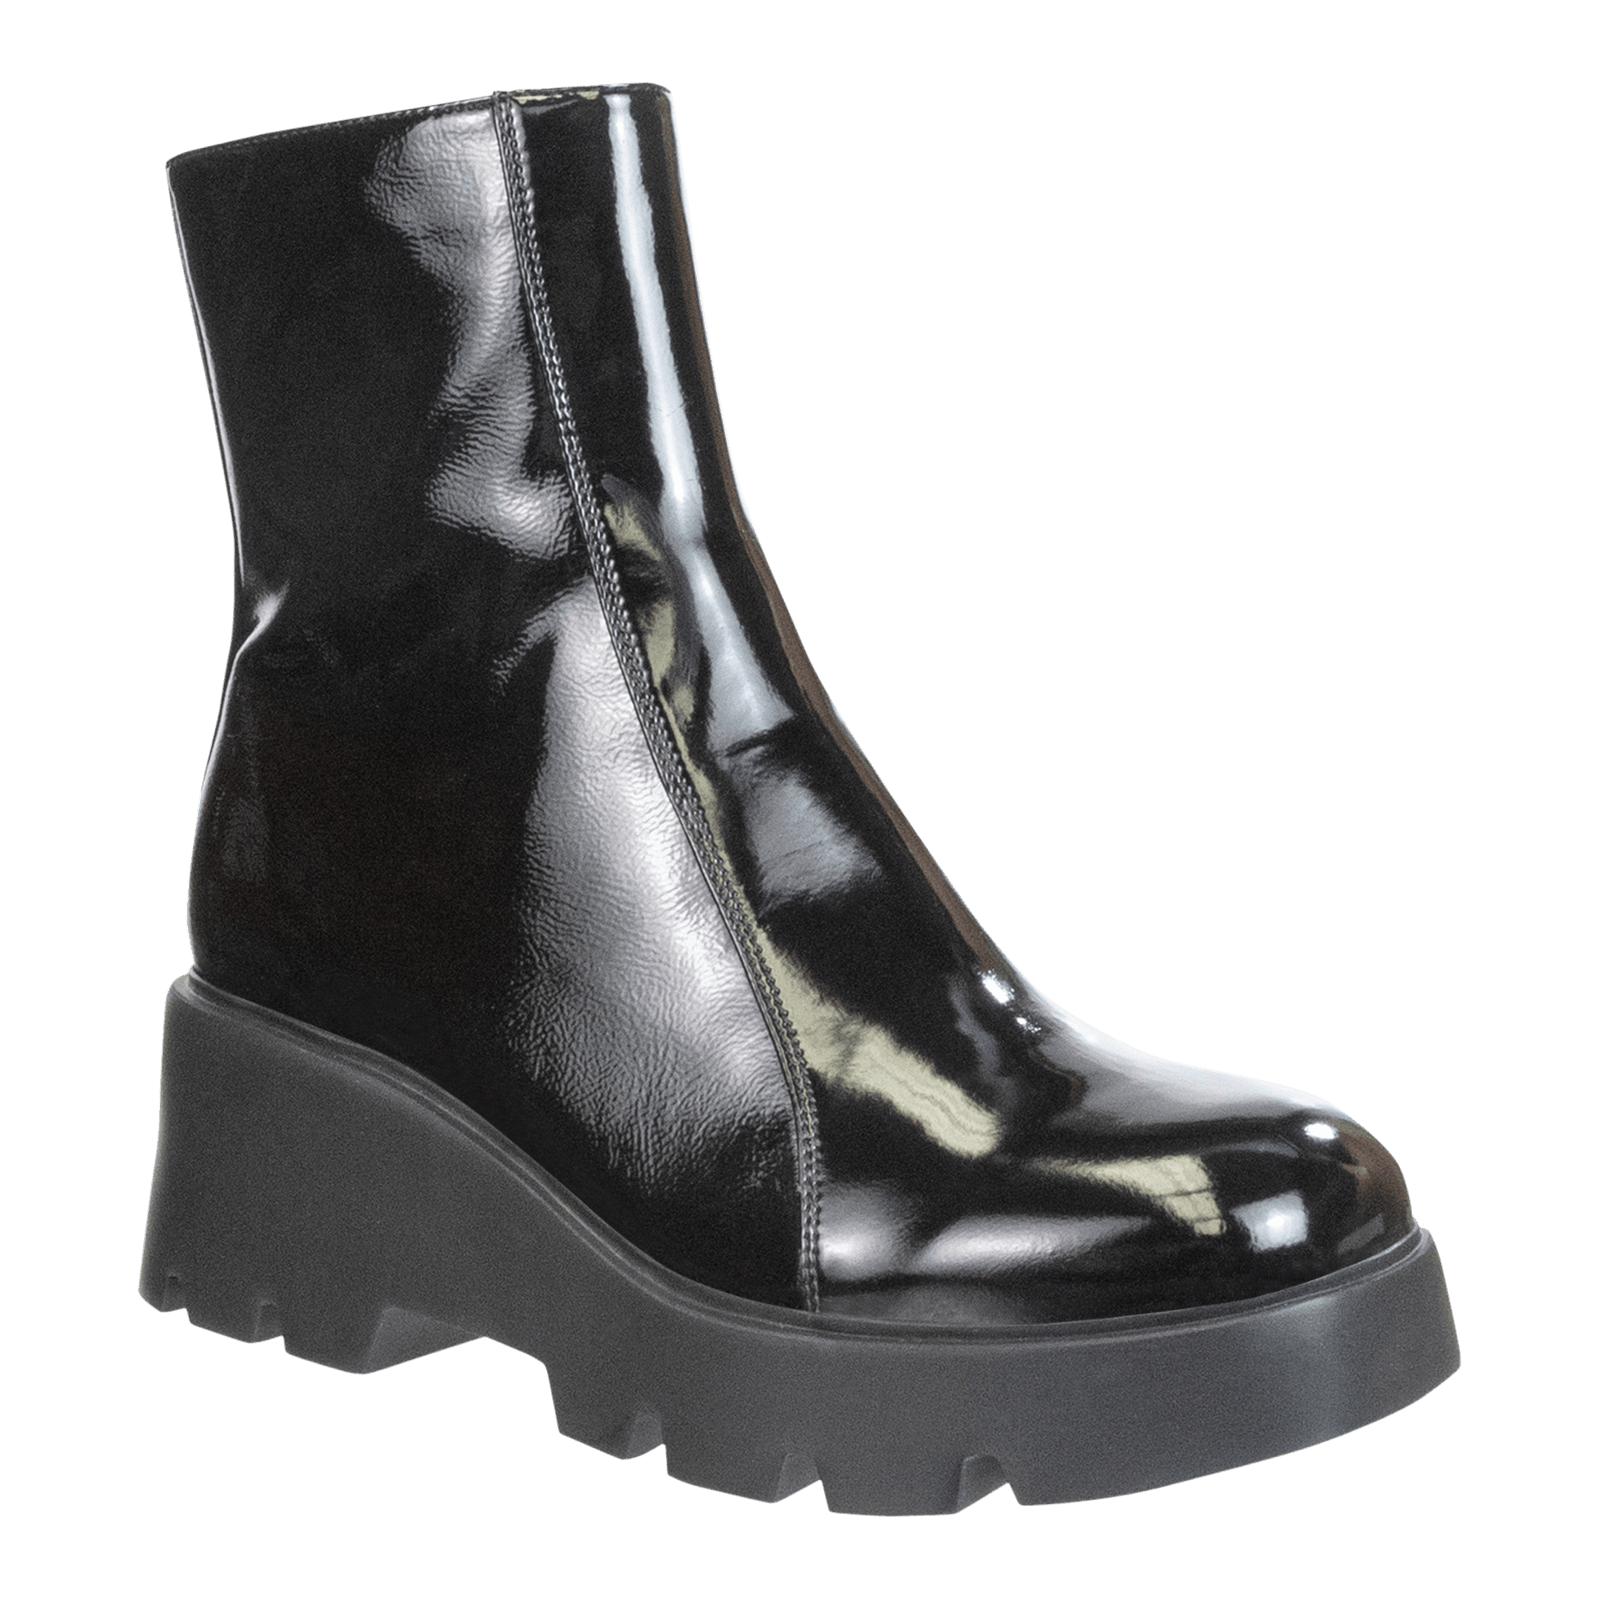 NAKED FEET - XENUS in BLACK Platform Ankle Boots WOMEN FOOTWEAR NAKED FEET 